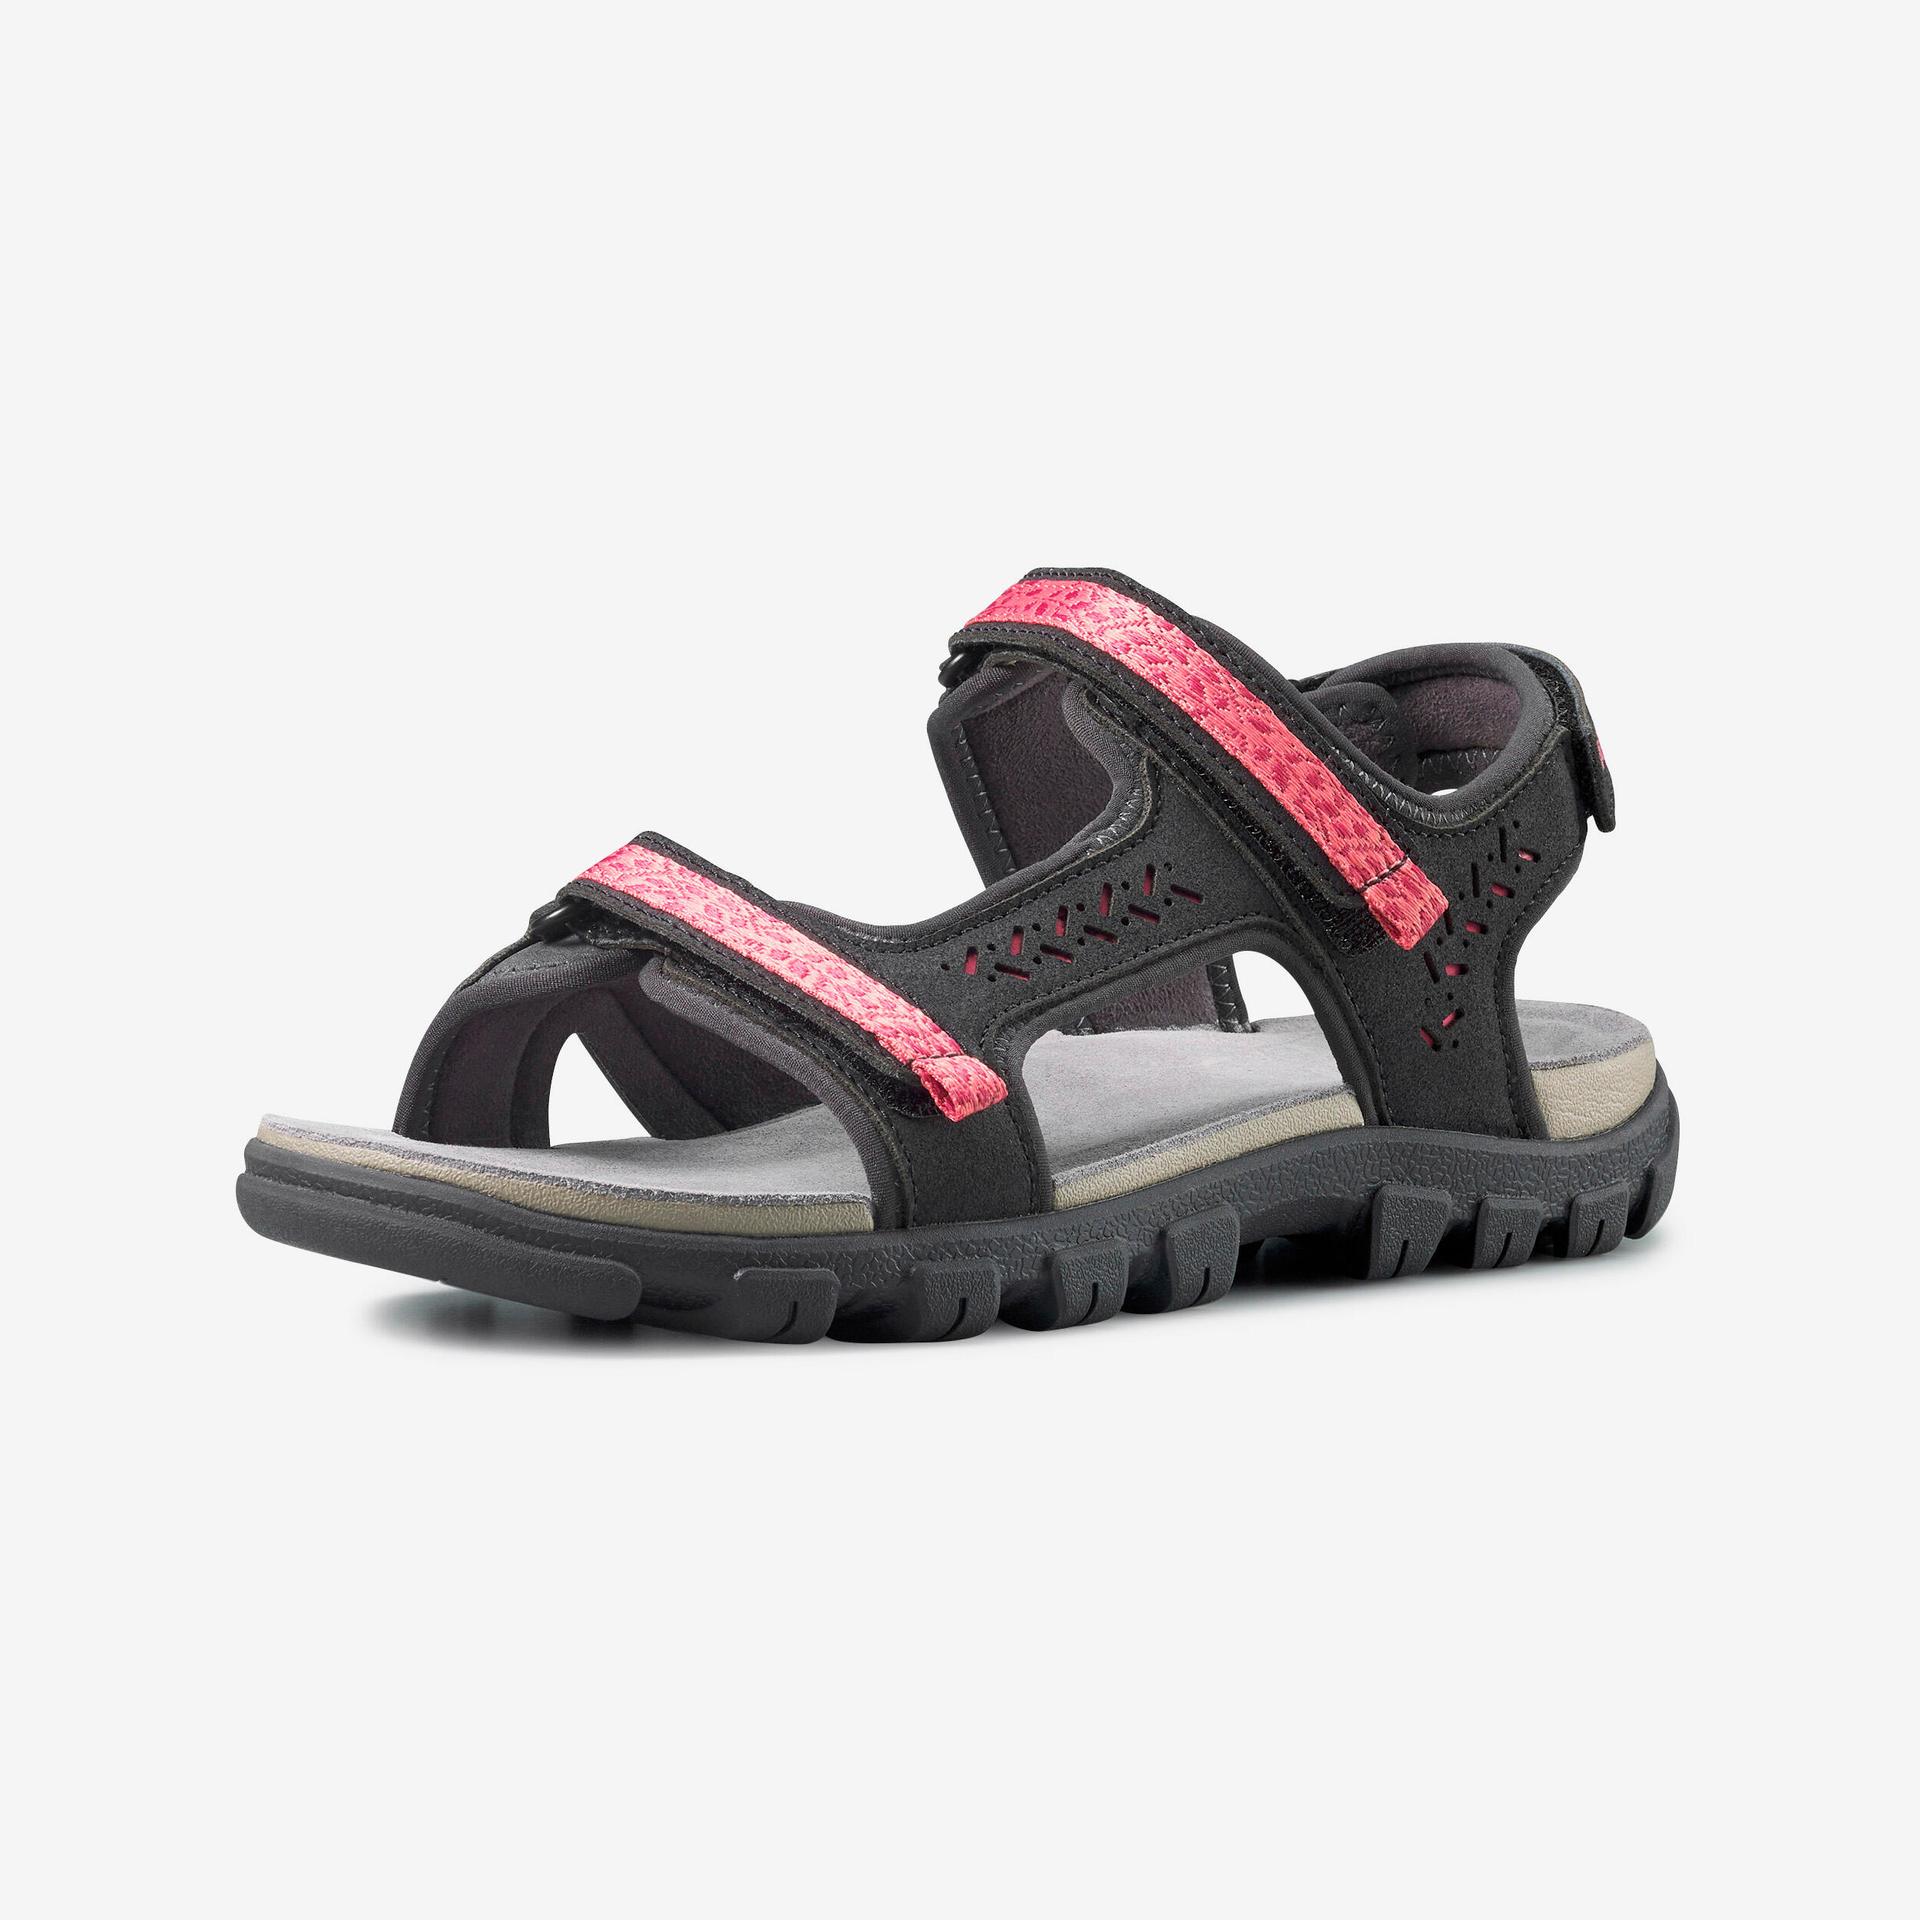 women hiking sandals - nh500 - blue/pink